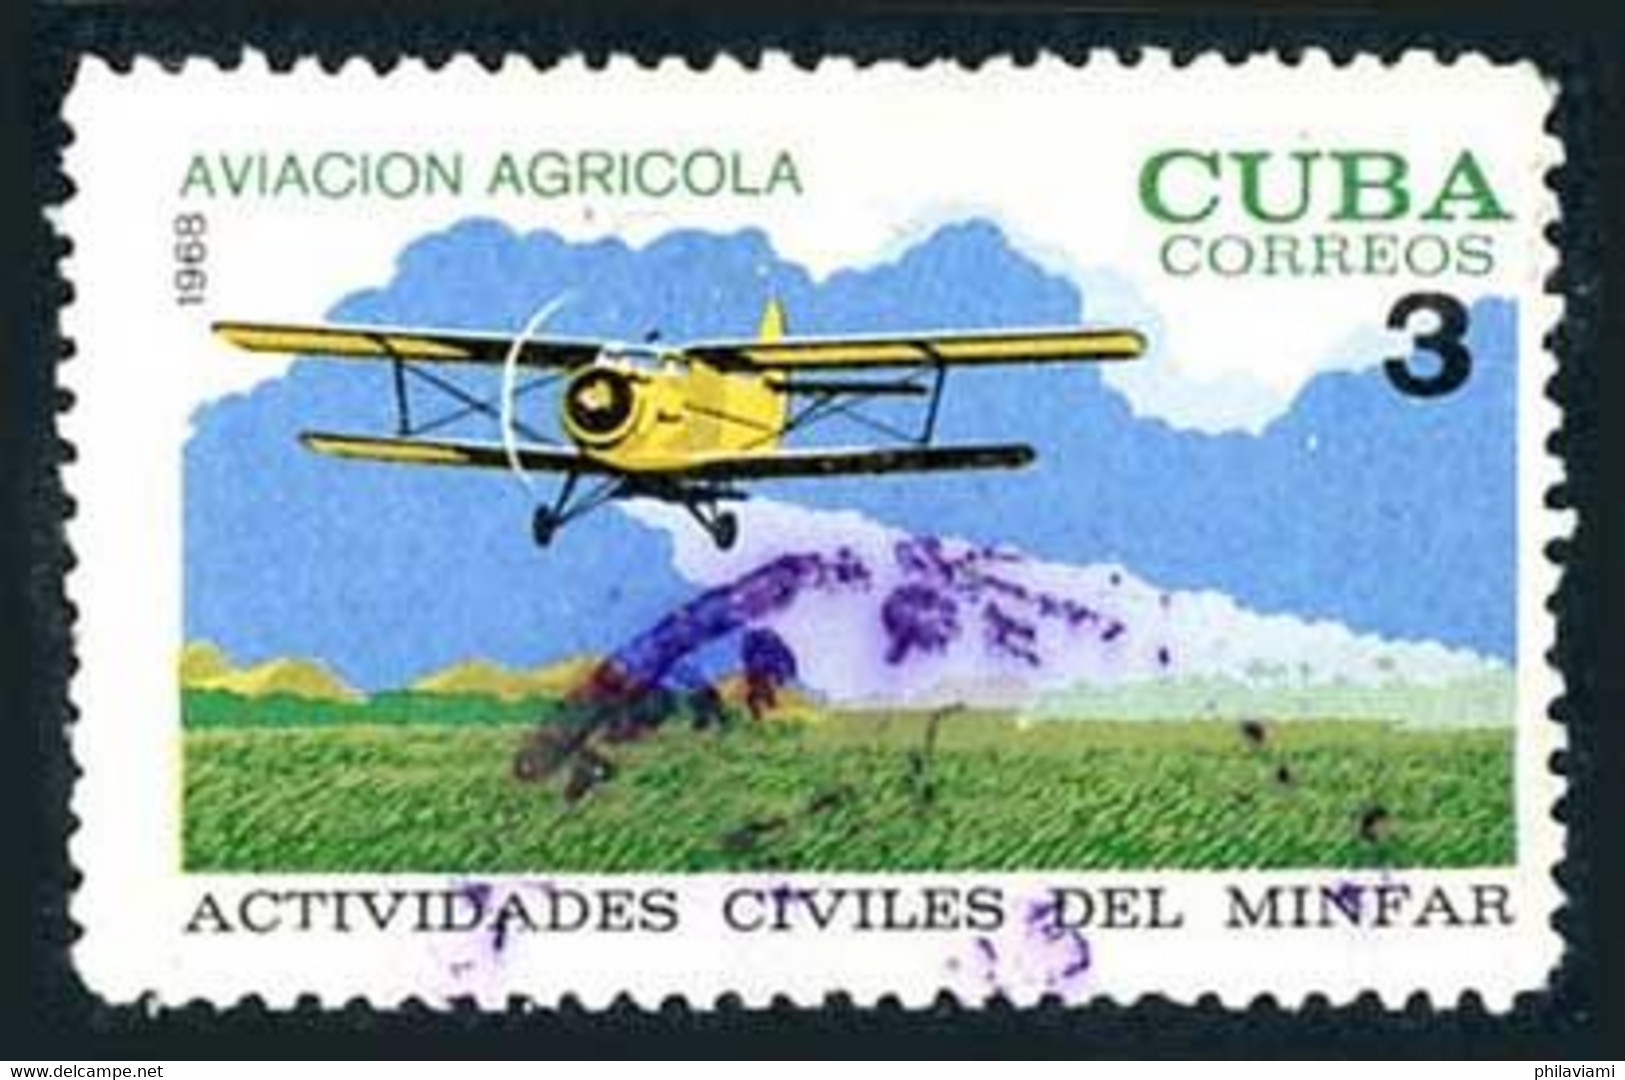 Cuba Kuba 1968 Antonov An-2 (Colt) Civil Activities Of Military Forces (Yvert 1262, Michel 650, St Gibbons 1618) - Aerei